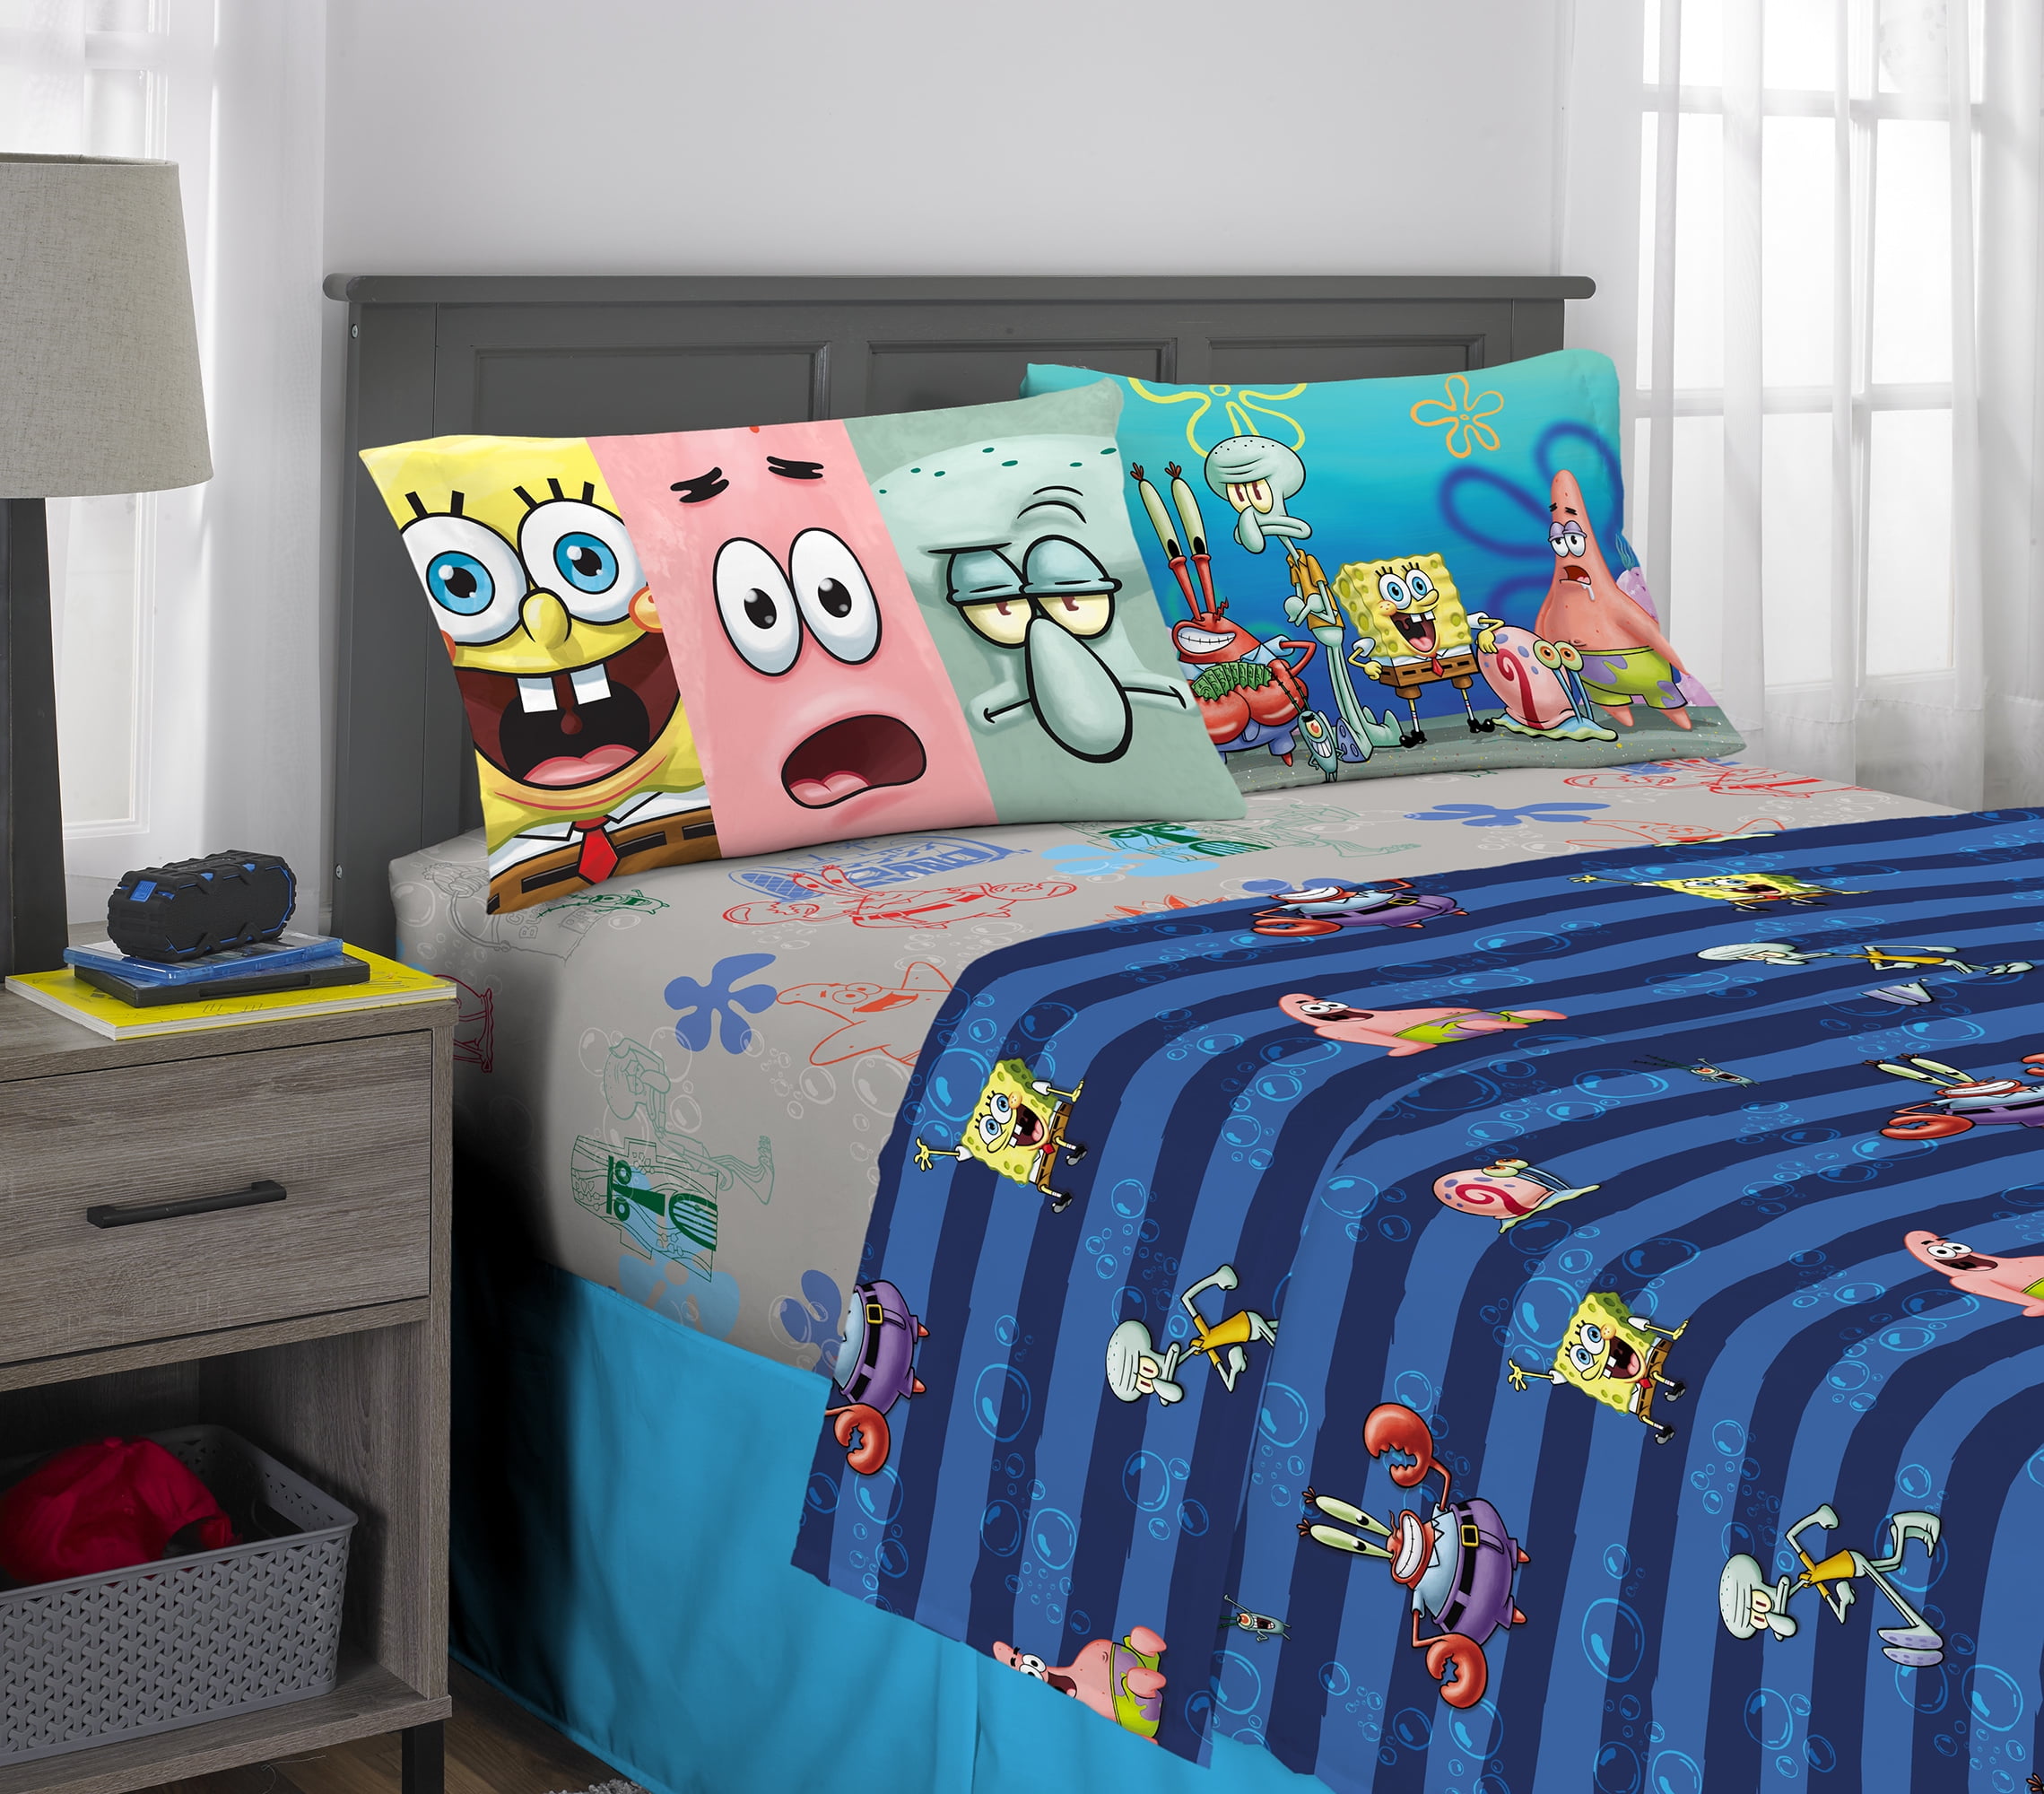 SpongeBob SquarePants Sheet Set, Kids Bedding, 4Piece Full Size